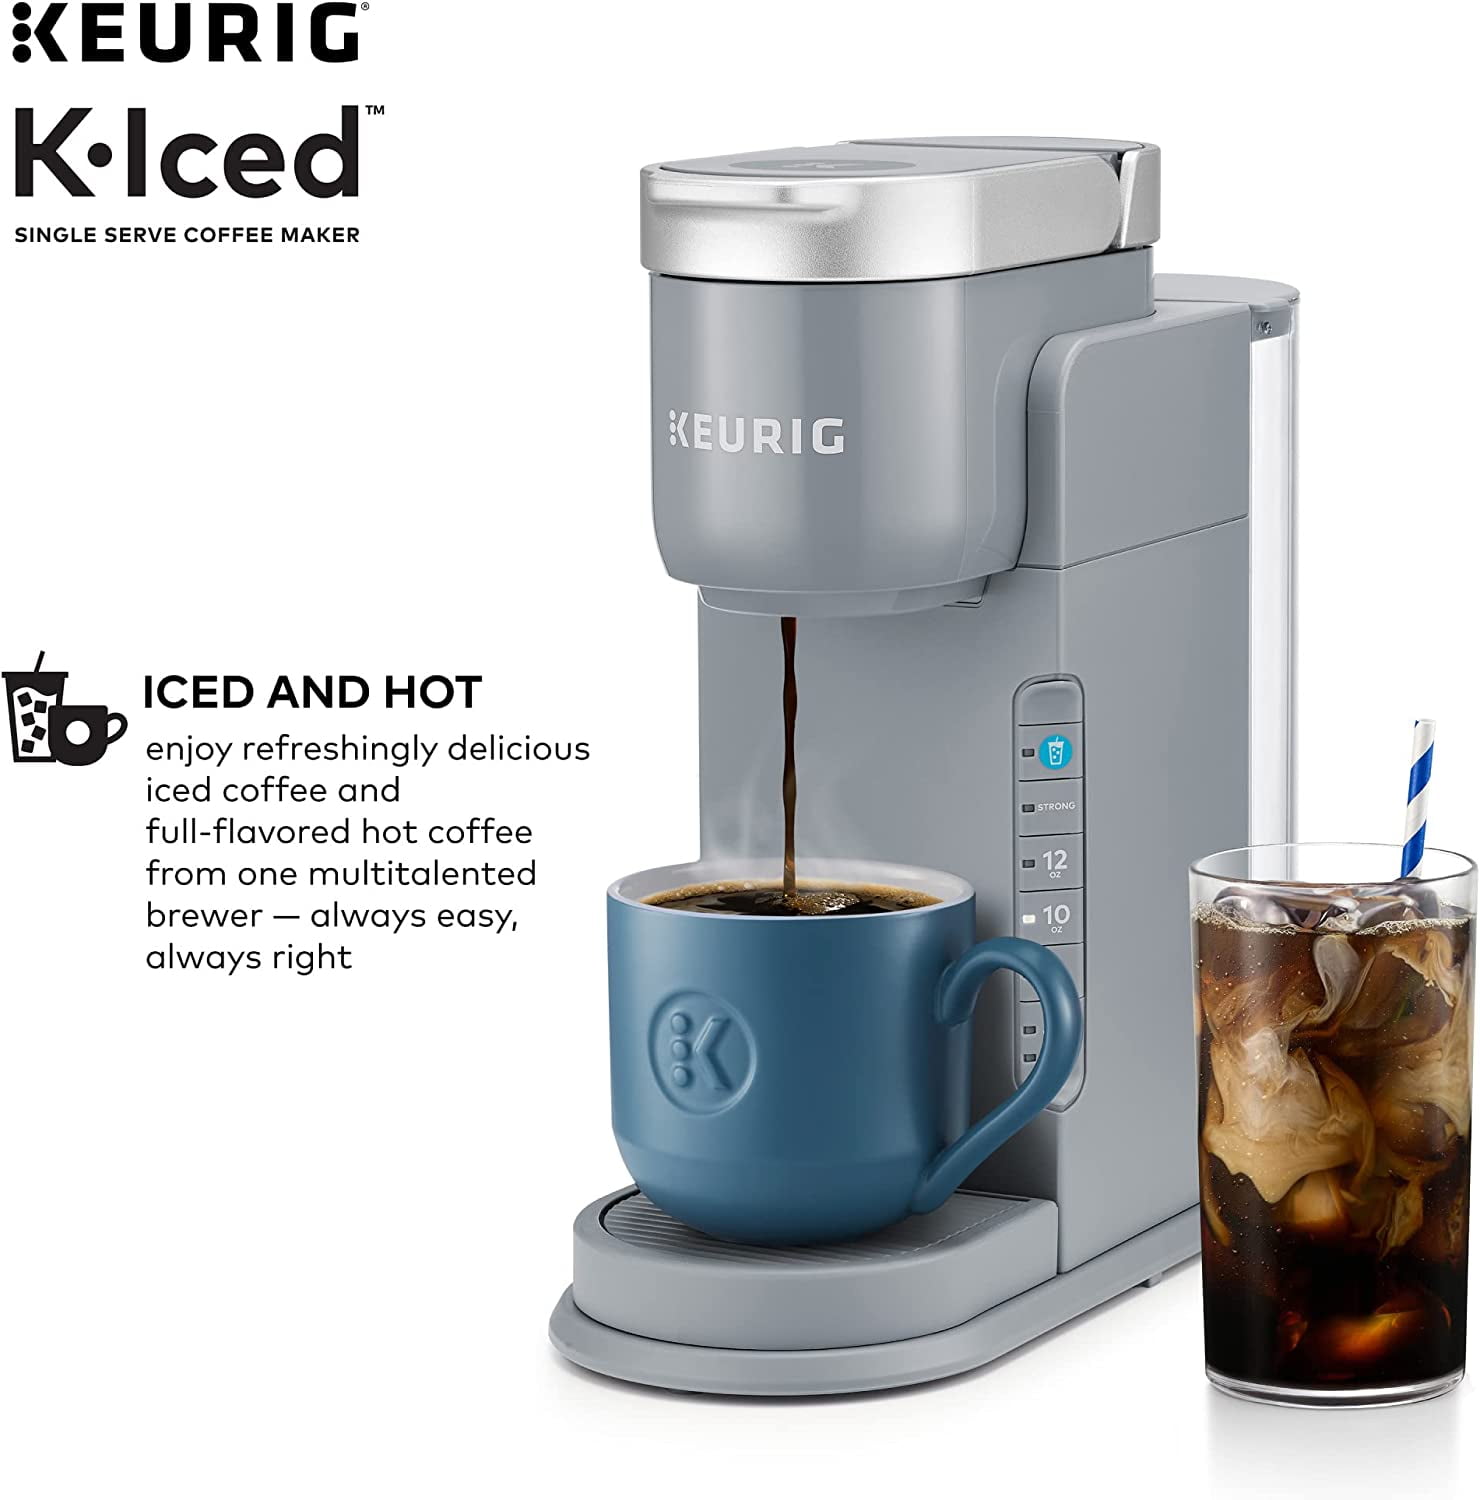 Keurig K-Iced Single Serve Coffee Maker, Gray 